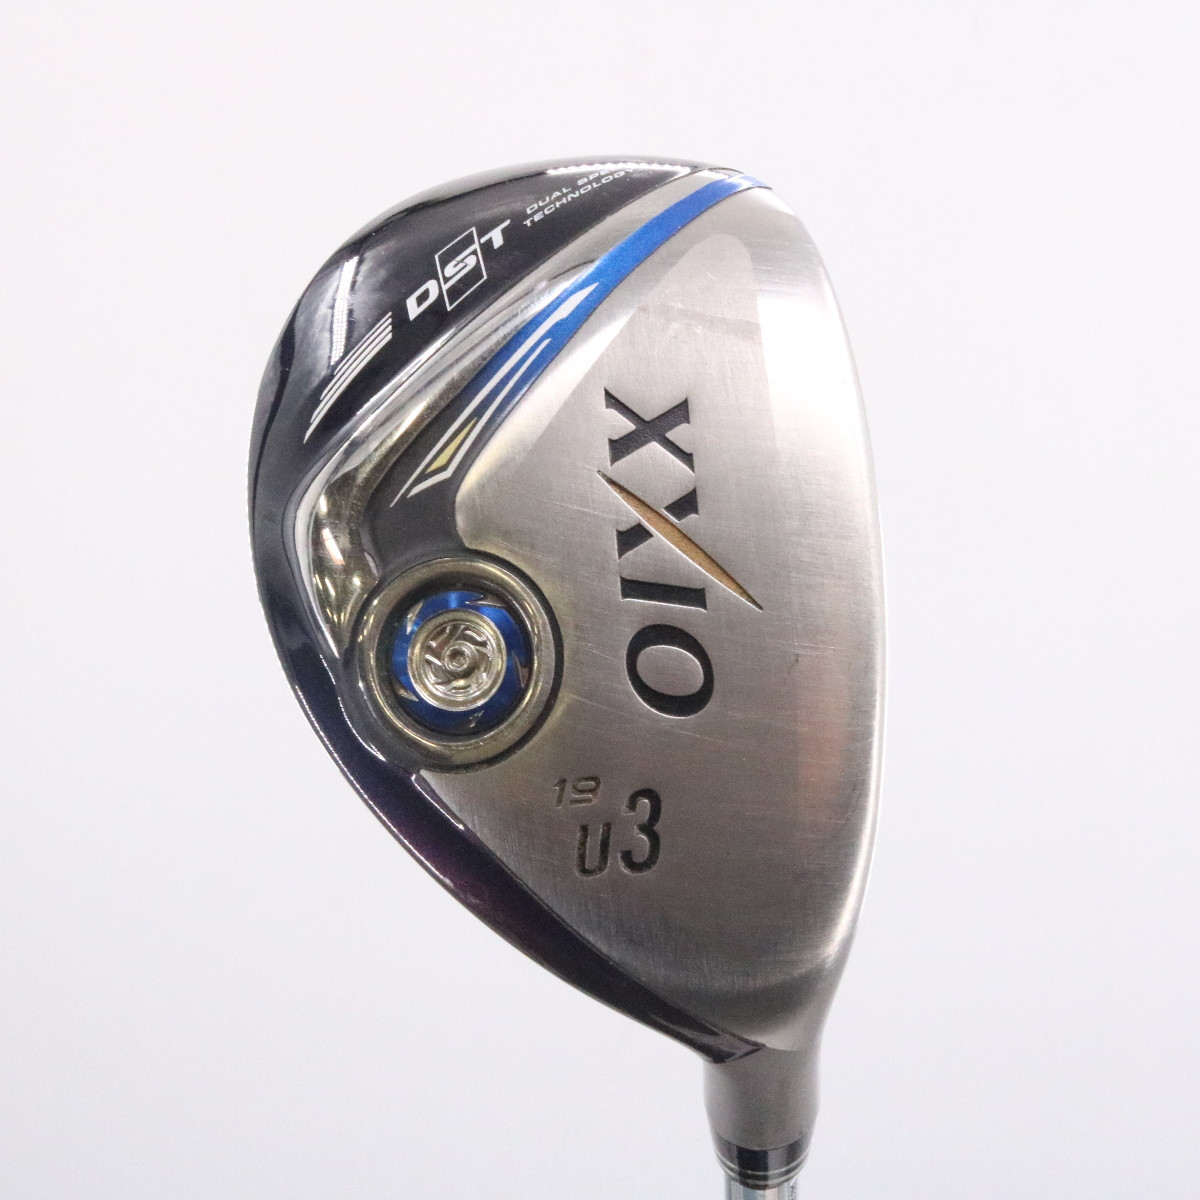 Xxio 9 U3 Hybrid 19 Degrees Graphite Mp 900 Stiff Flex Right Handed d Mr Topes Golf